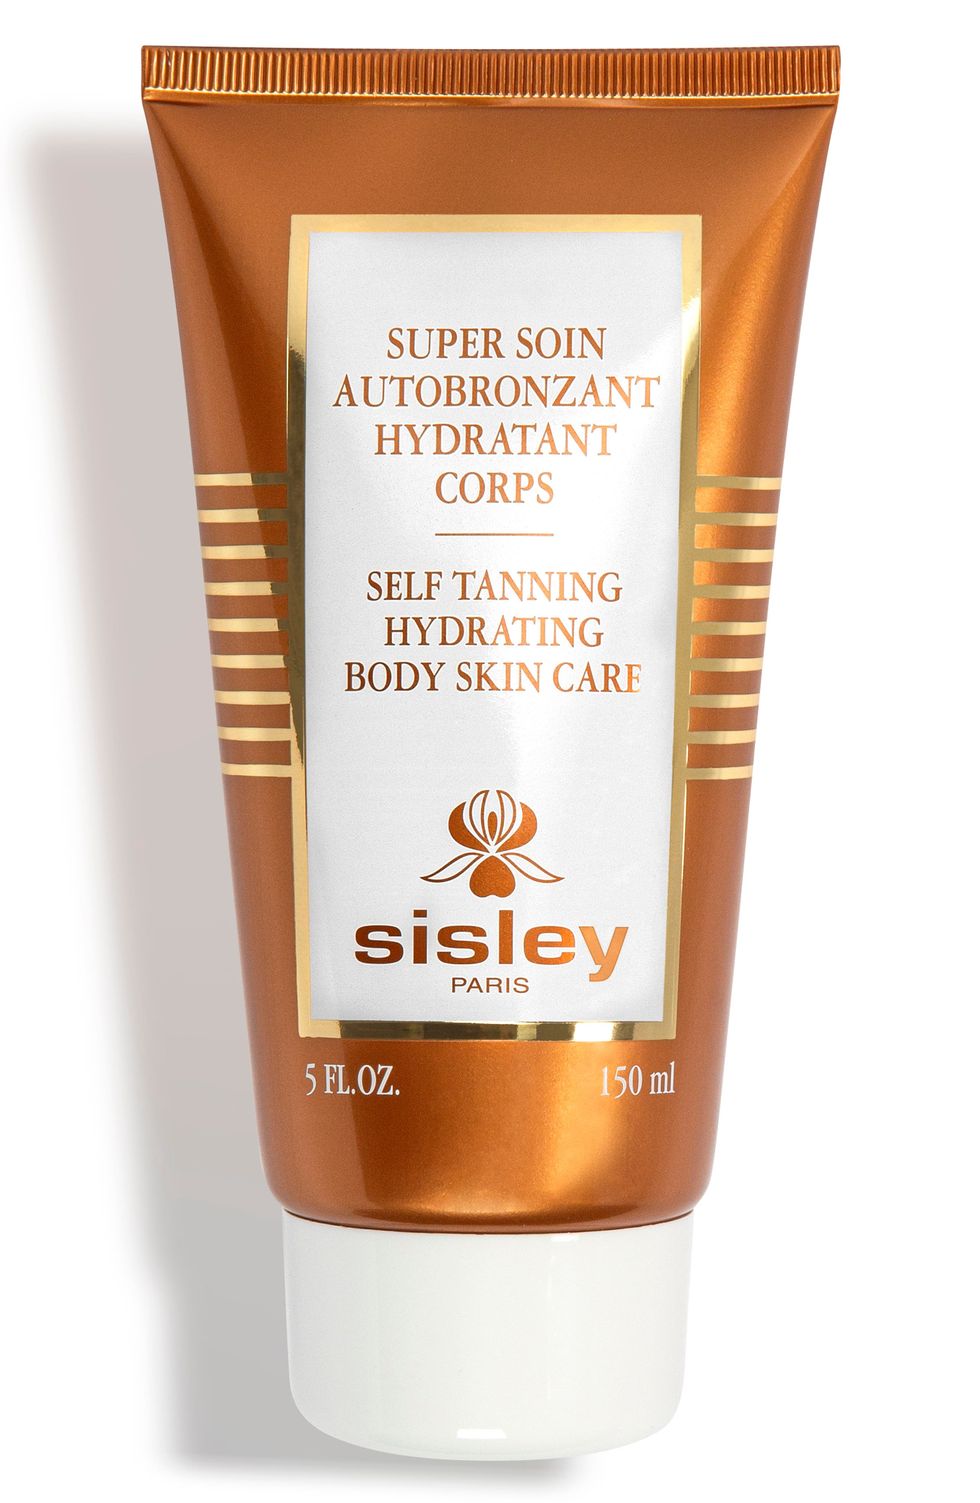 Sisley Paris Self Tanning Hydrating Body Skin Care at Nordstrom